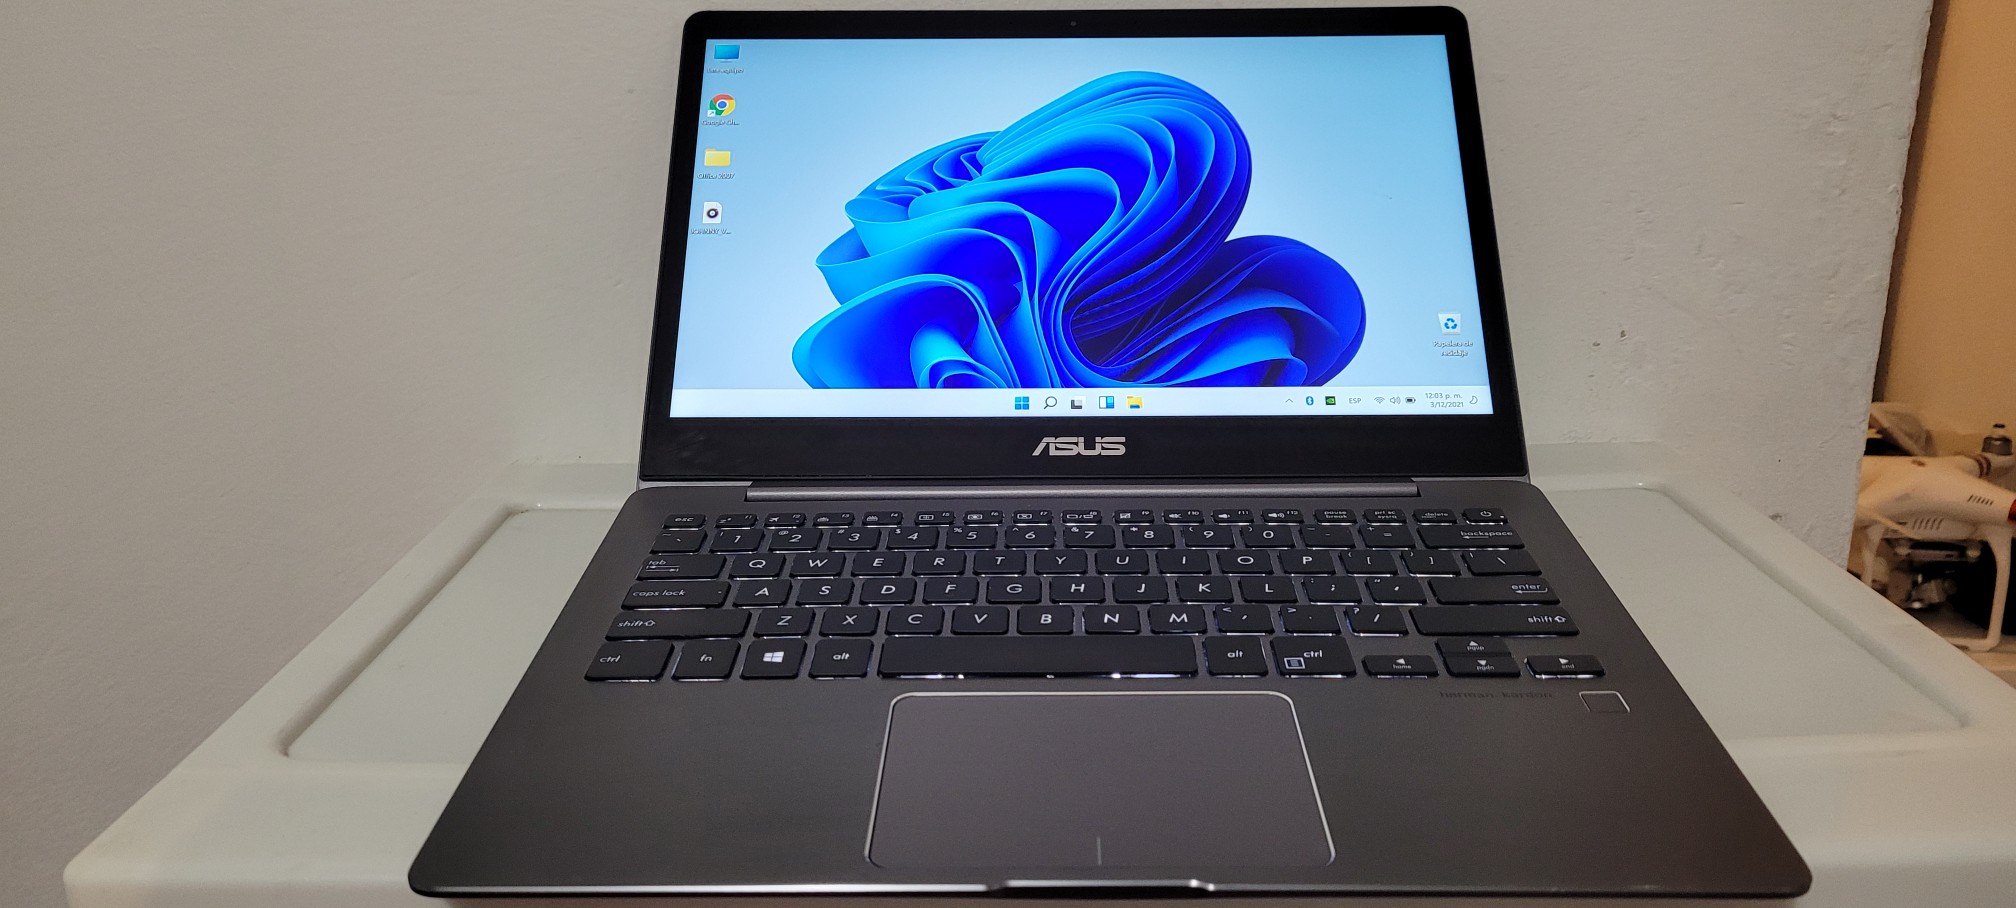 computadoras y laptops - Laptop Asus Slim 14 Pulg Core i5 8va Gen Ram 8gb ddr4 Disco 256gb SSD nvidea 2gb